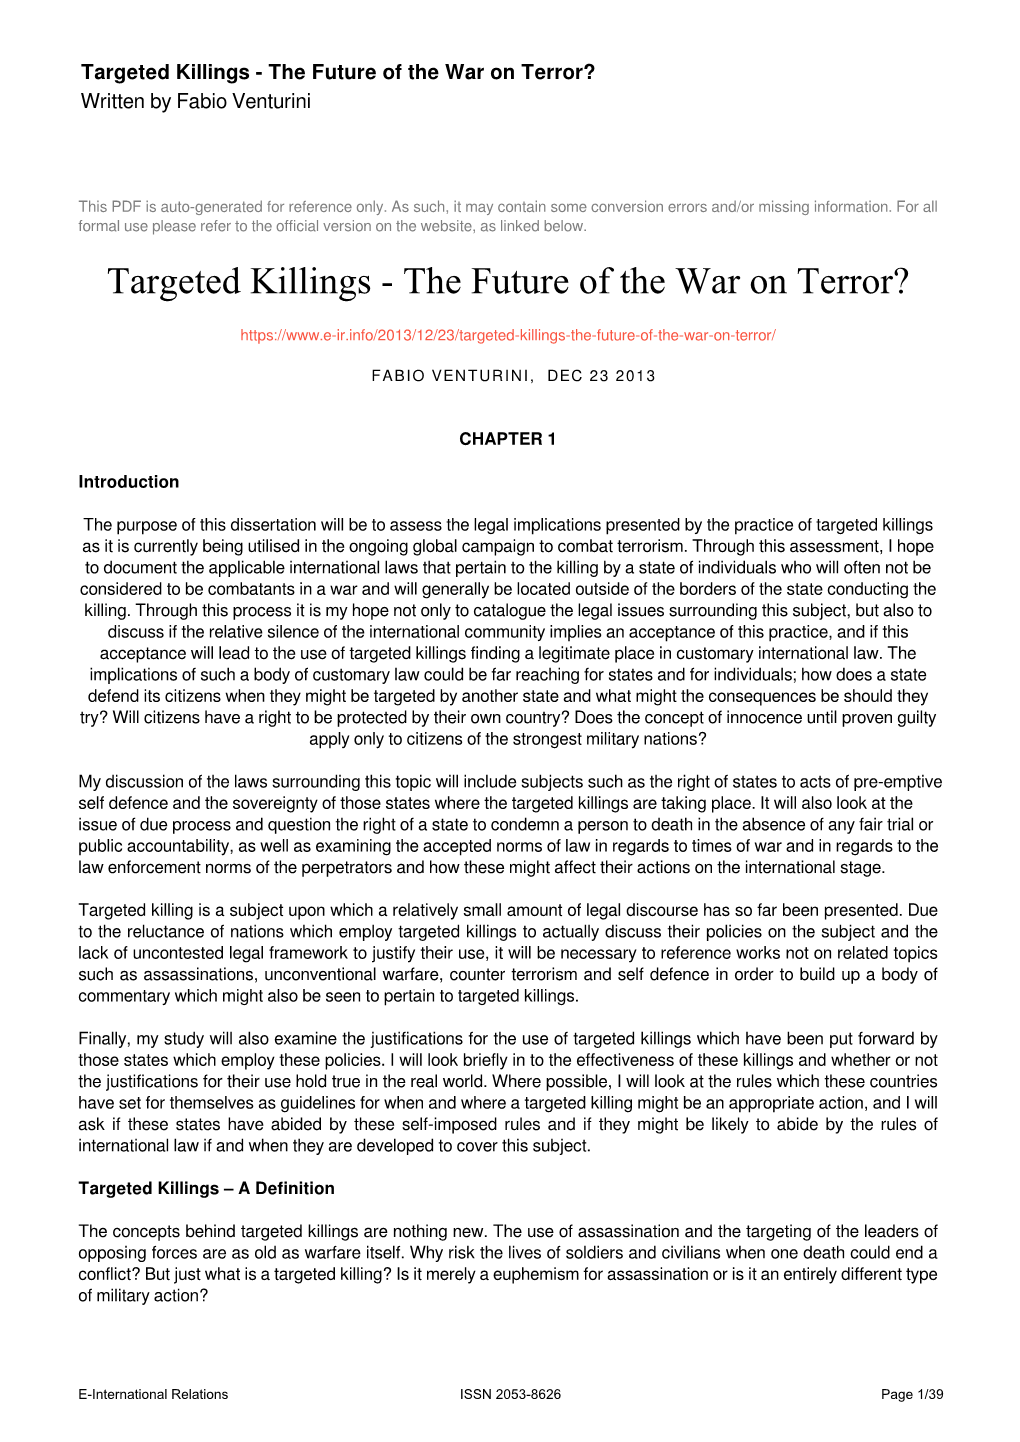 Targeted Killings - the Future of the War on Terror? Written by Fabio Venturini